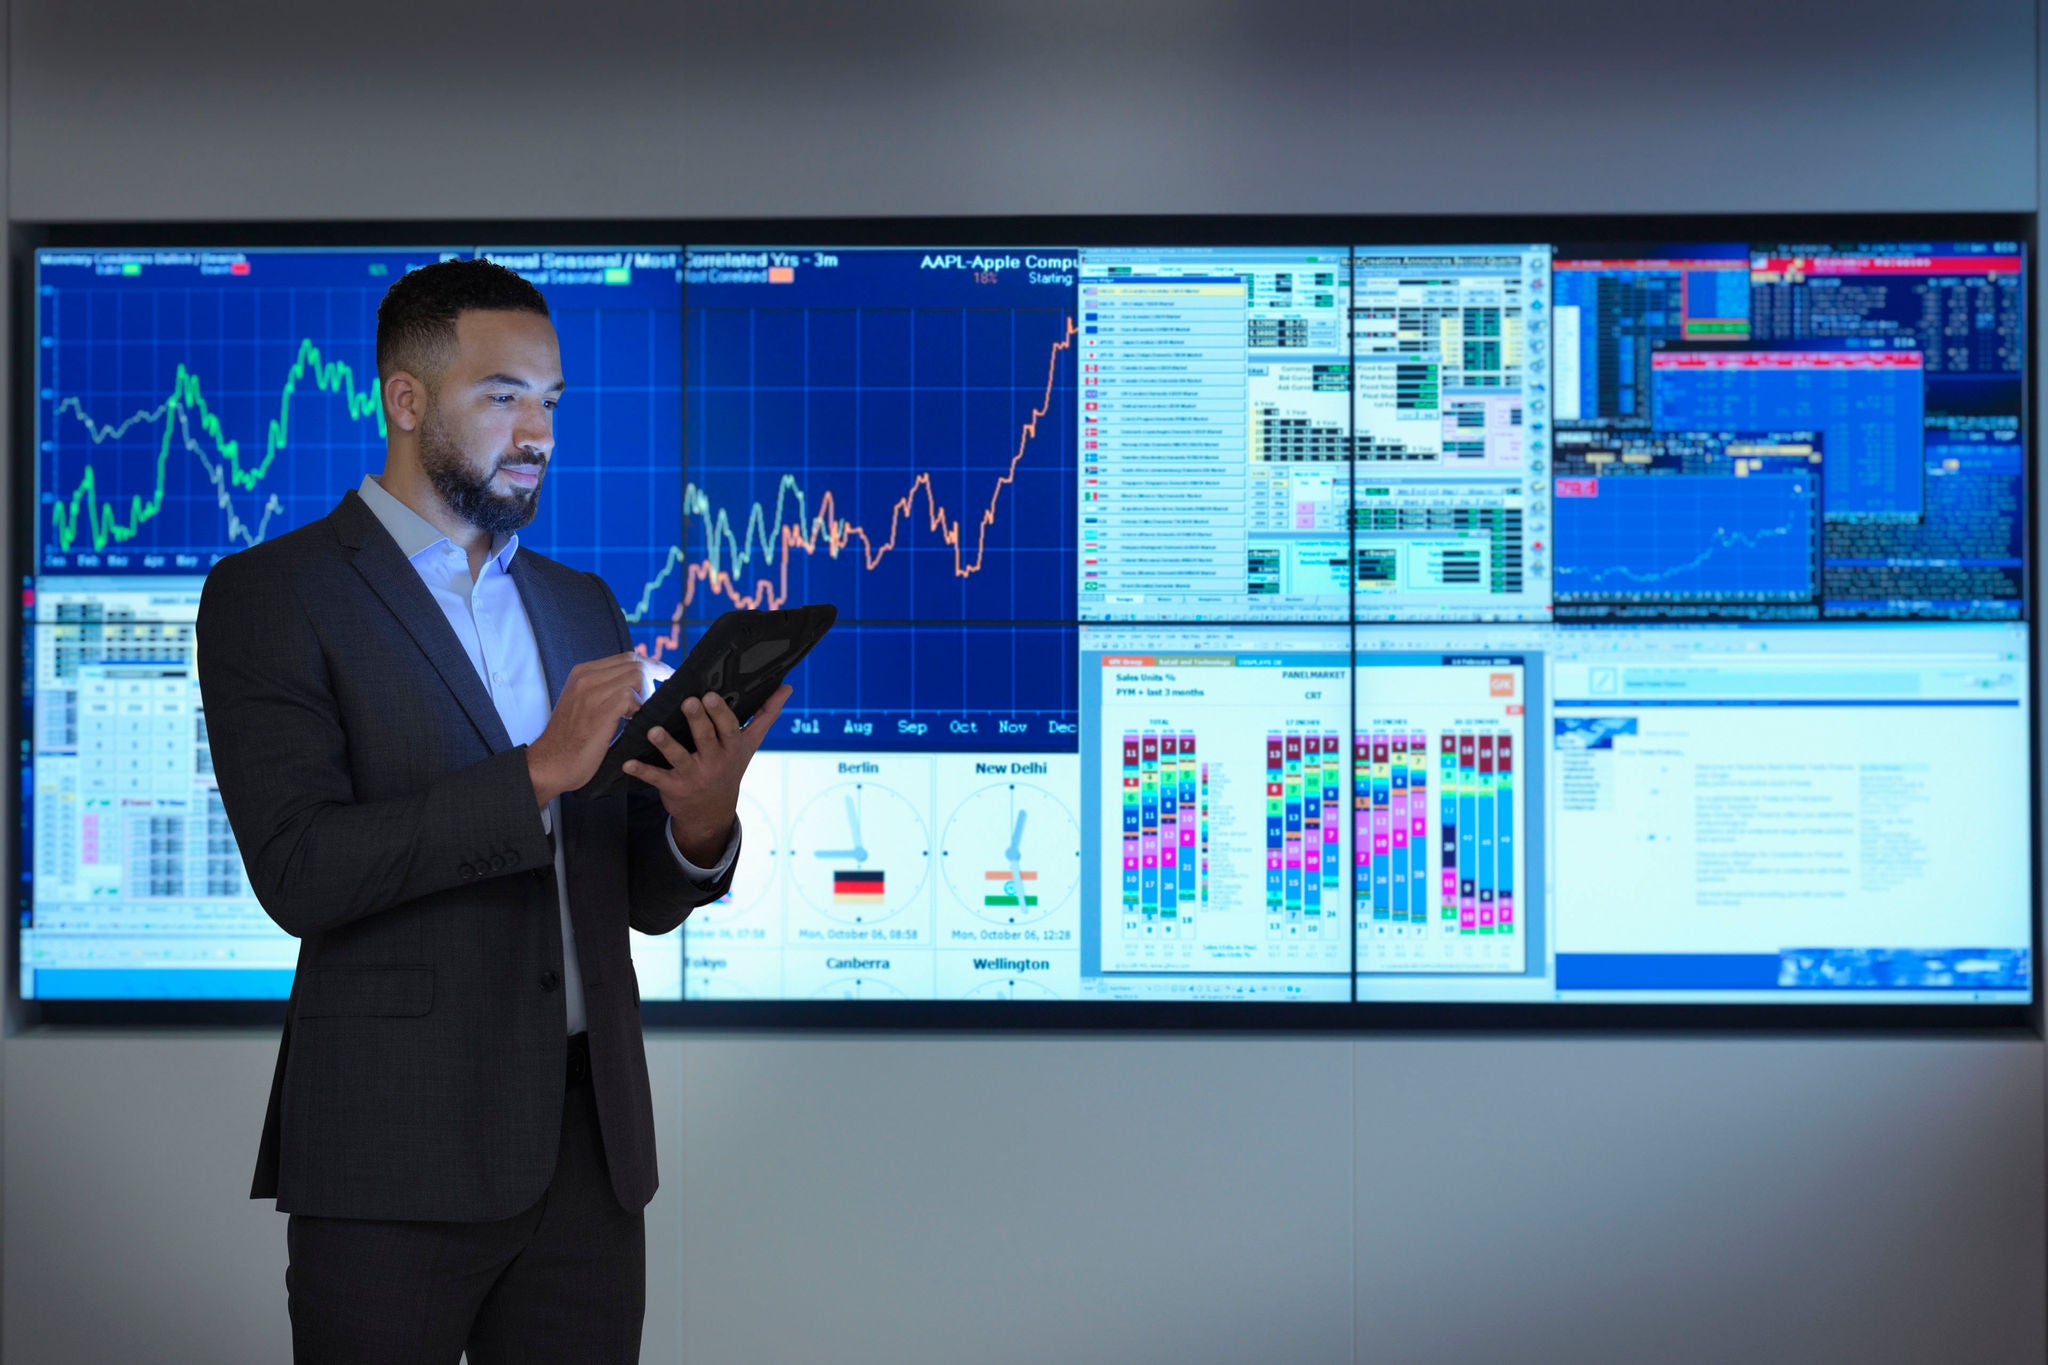 Businessman using digital tablet in front of digital charts